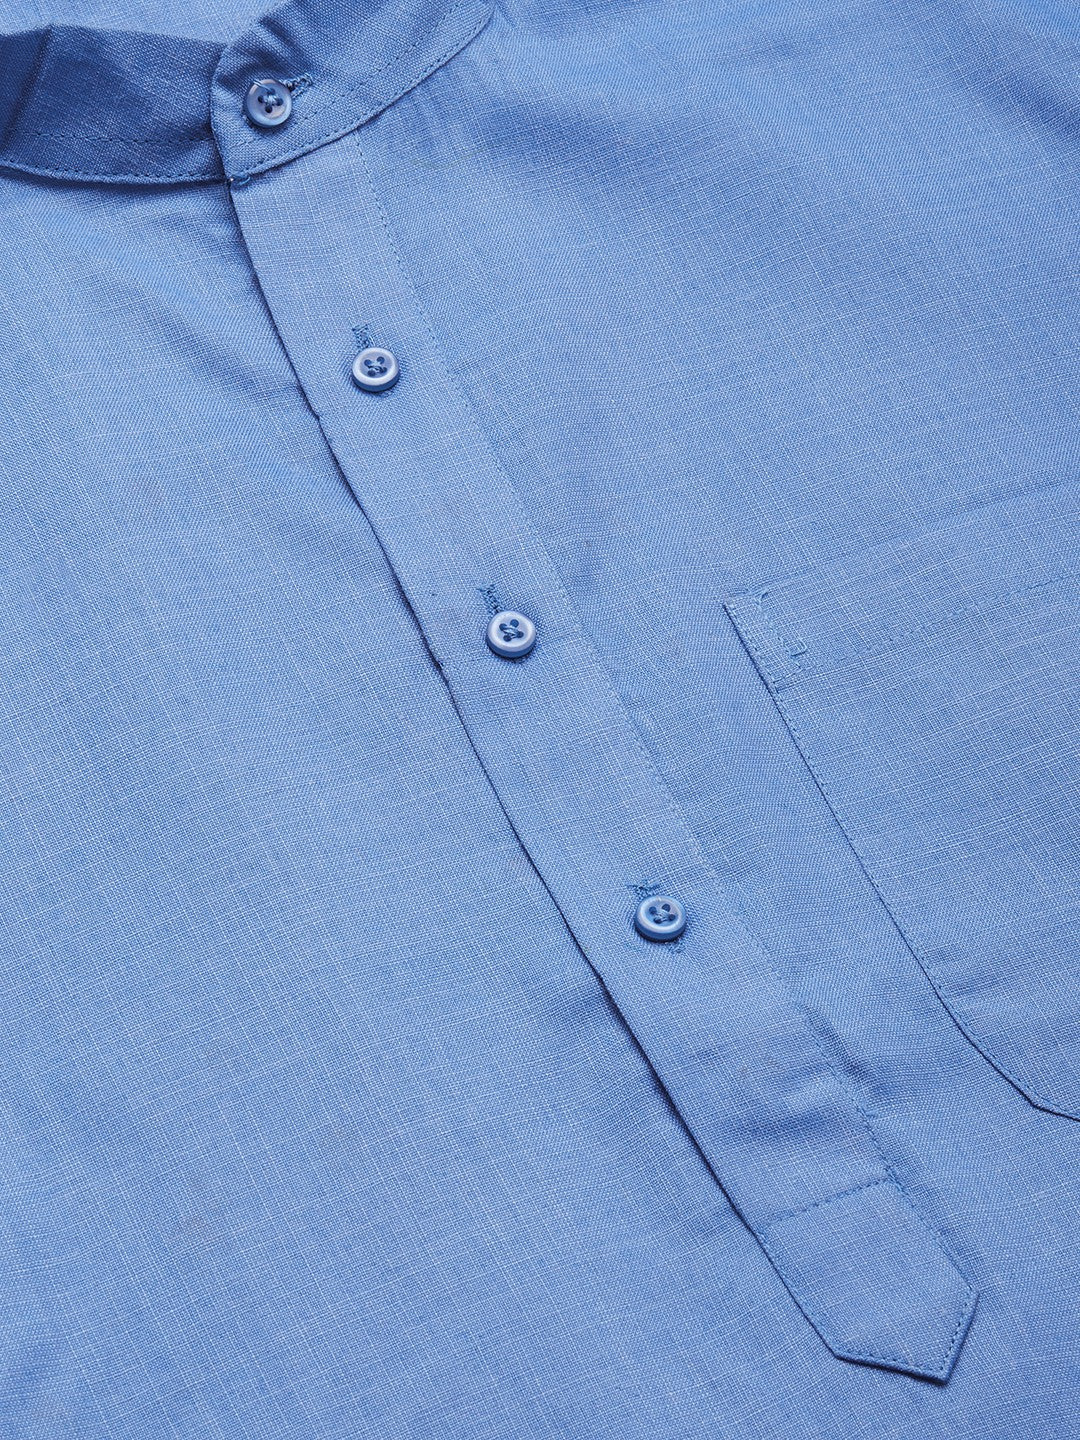 Jompers Men's Blue Cotton Solid Kurta Pyjama